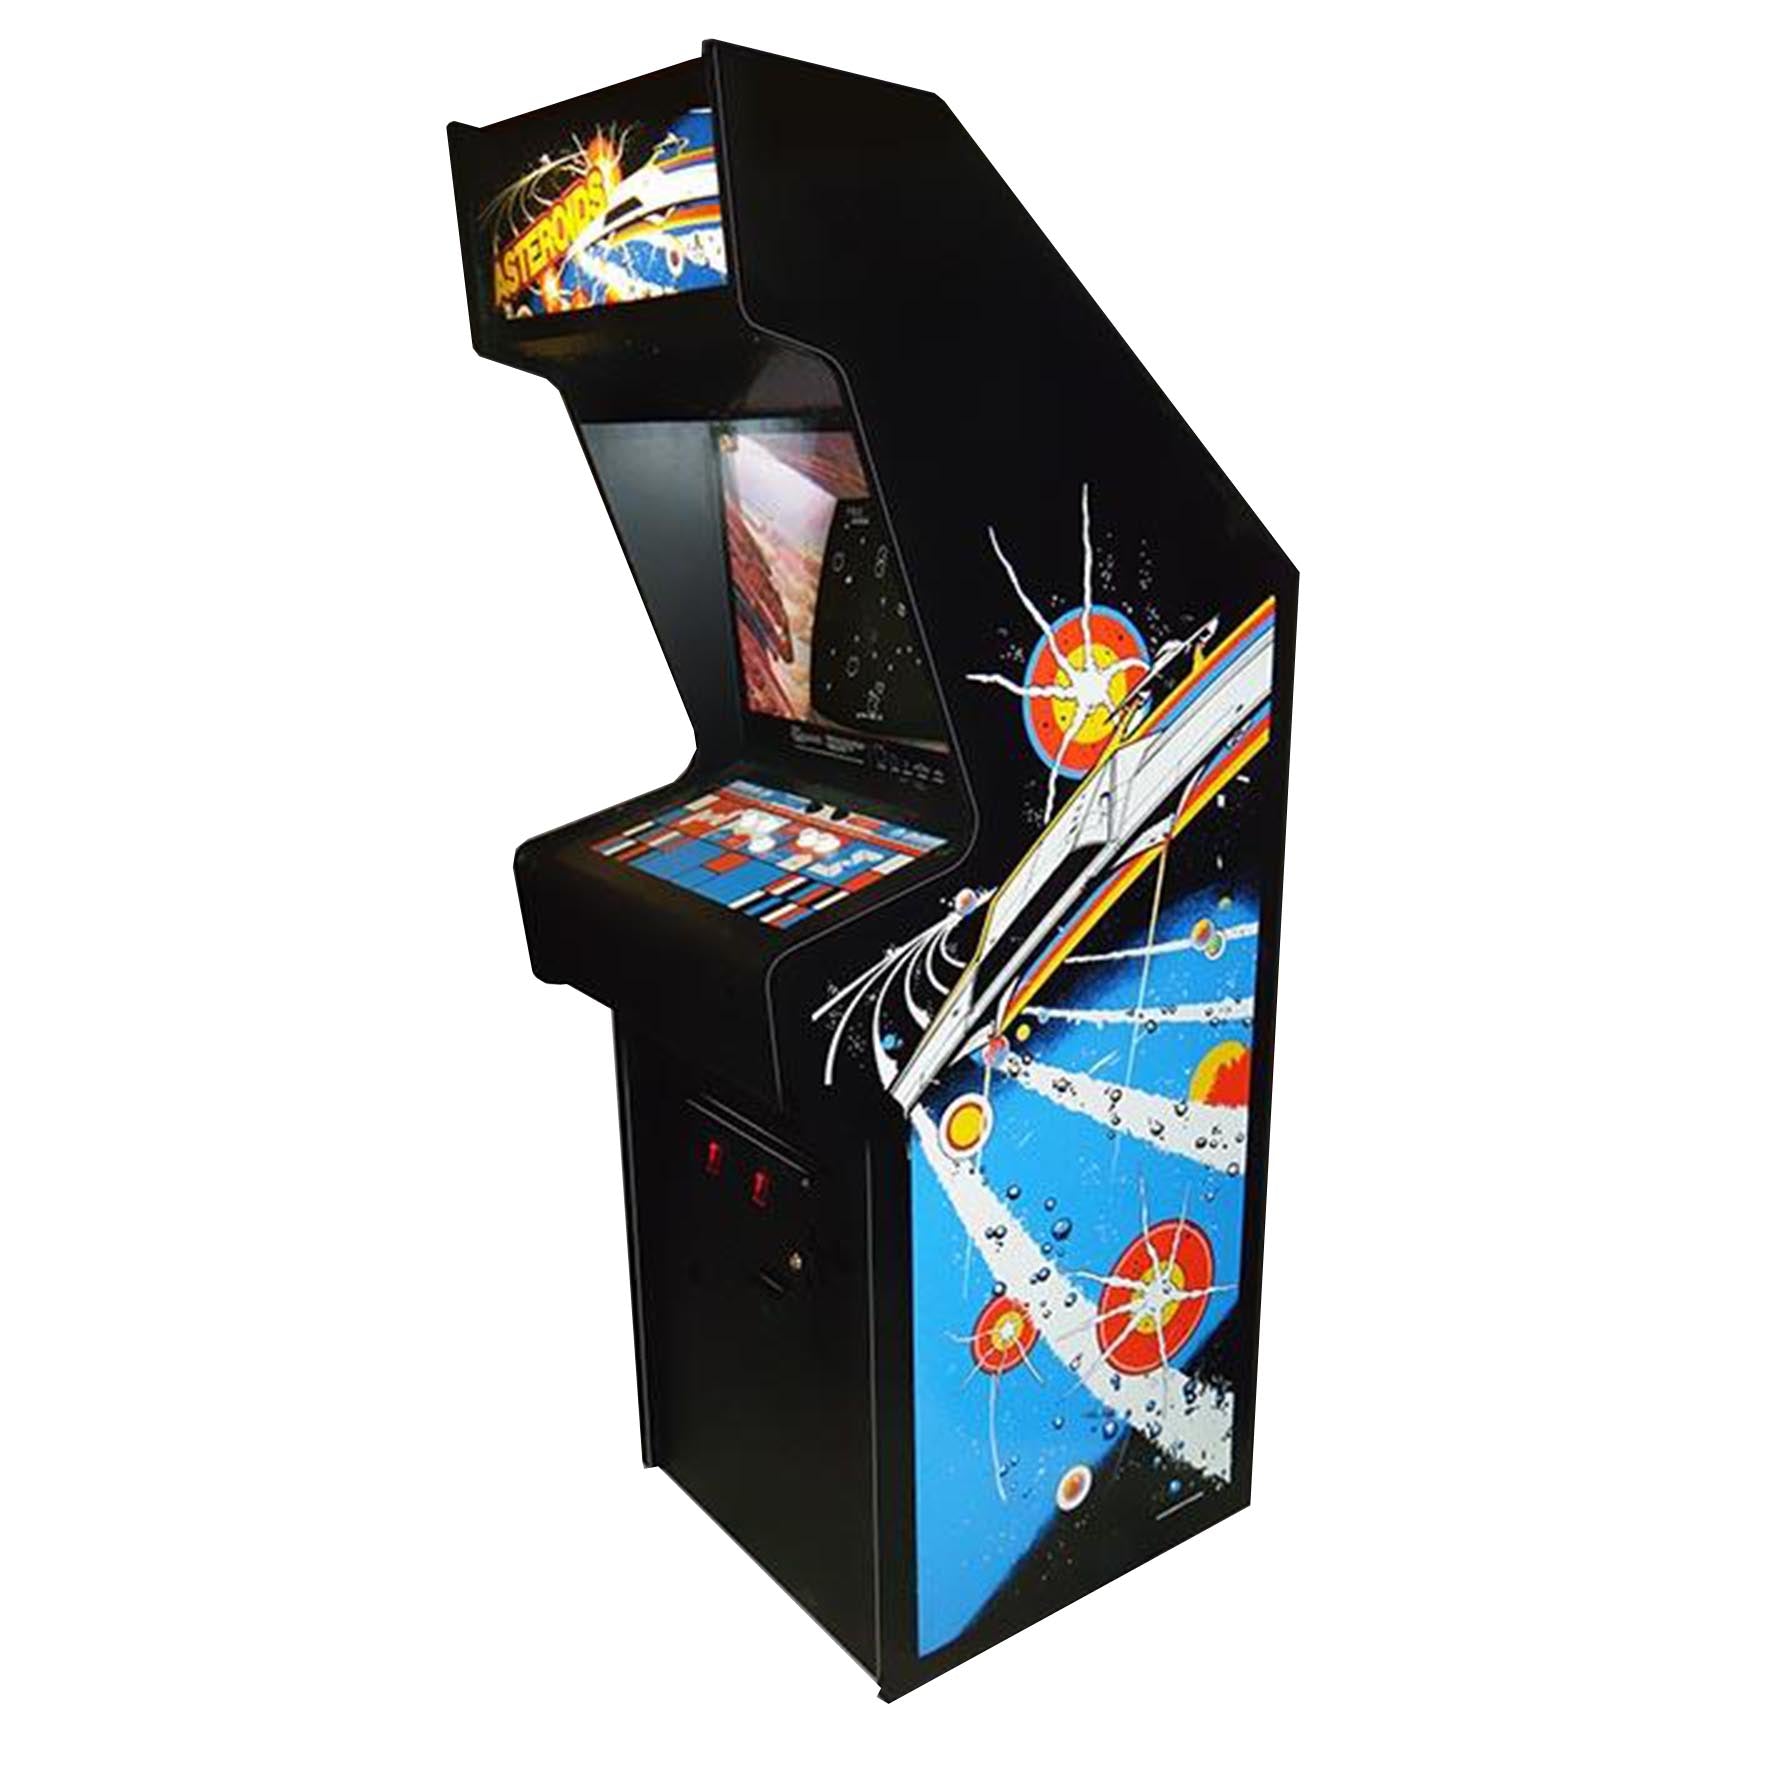 Original 1979 Asteroids Arcade Machine by Atari